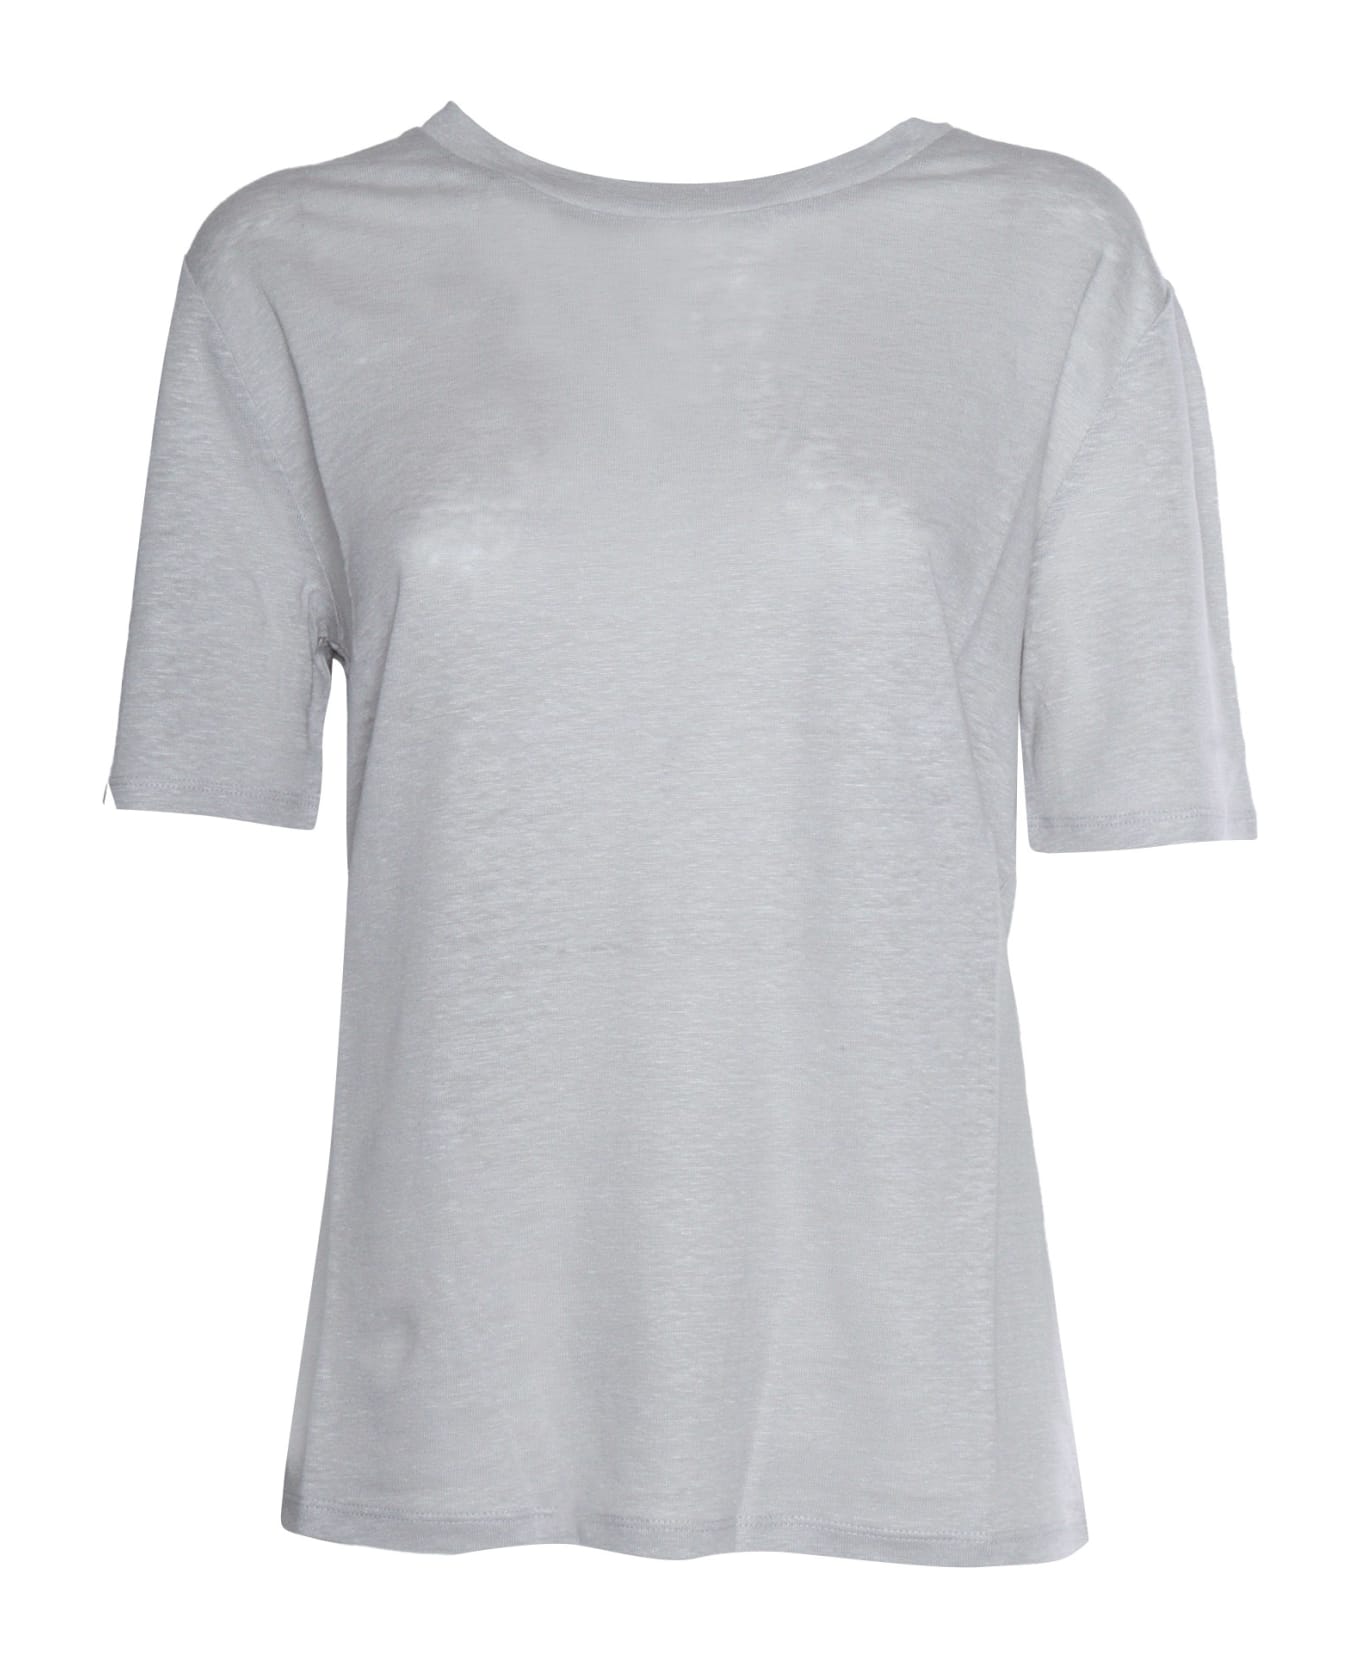 Kangra Grey T-shirt - GREY